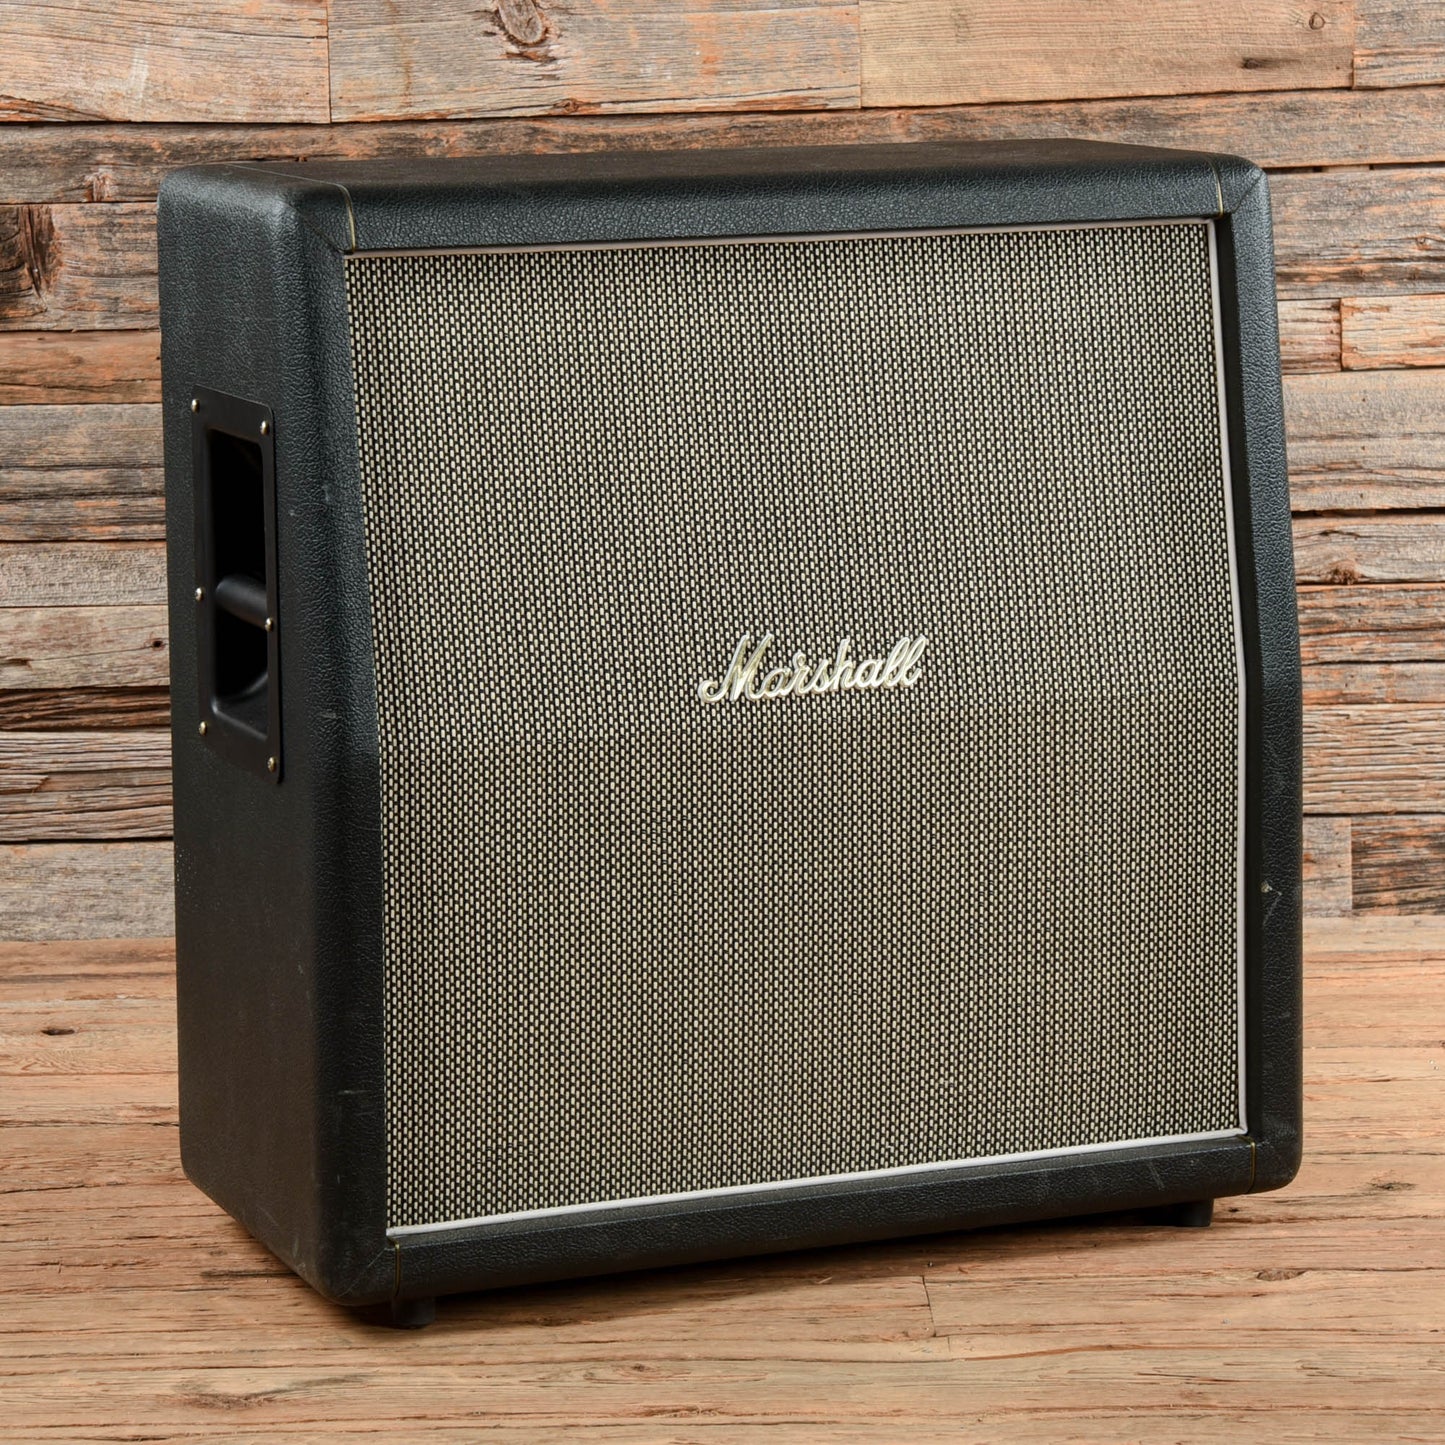 Marshall 2061cx 2x12" Guitar Speaker Cab